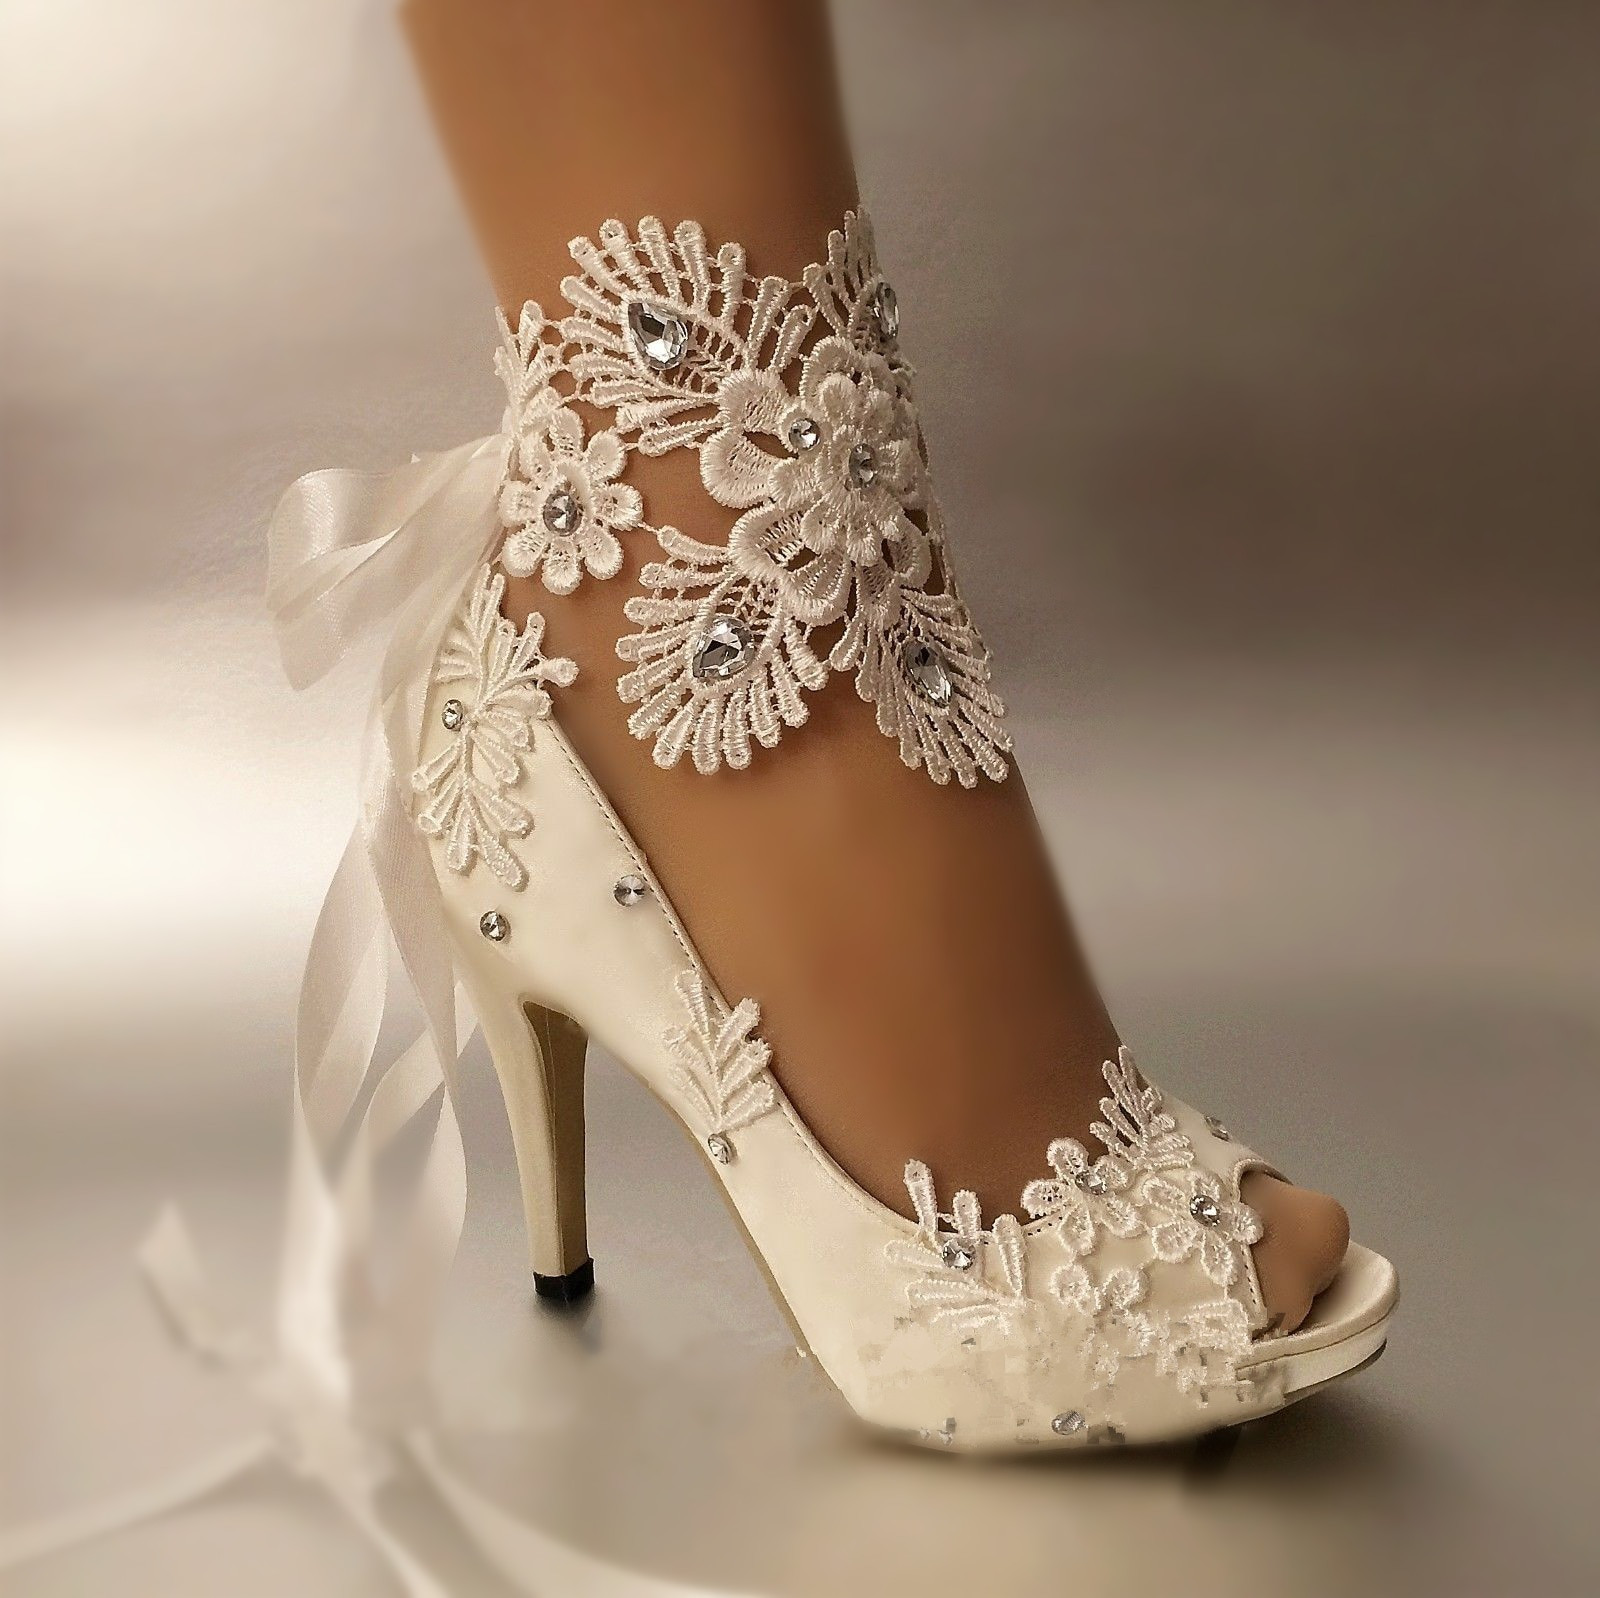 Wedding Shoes With Lace
 Aliexpress Buy Dress Shoes Women Pumps Open toe lace